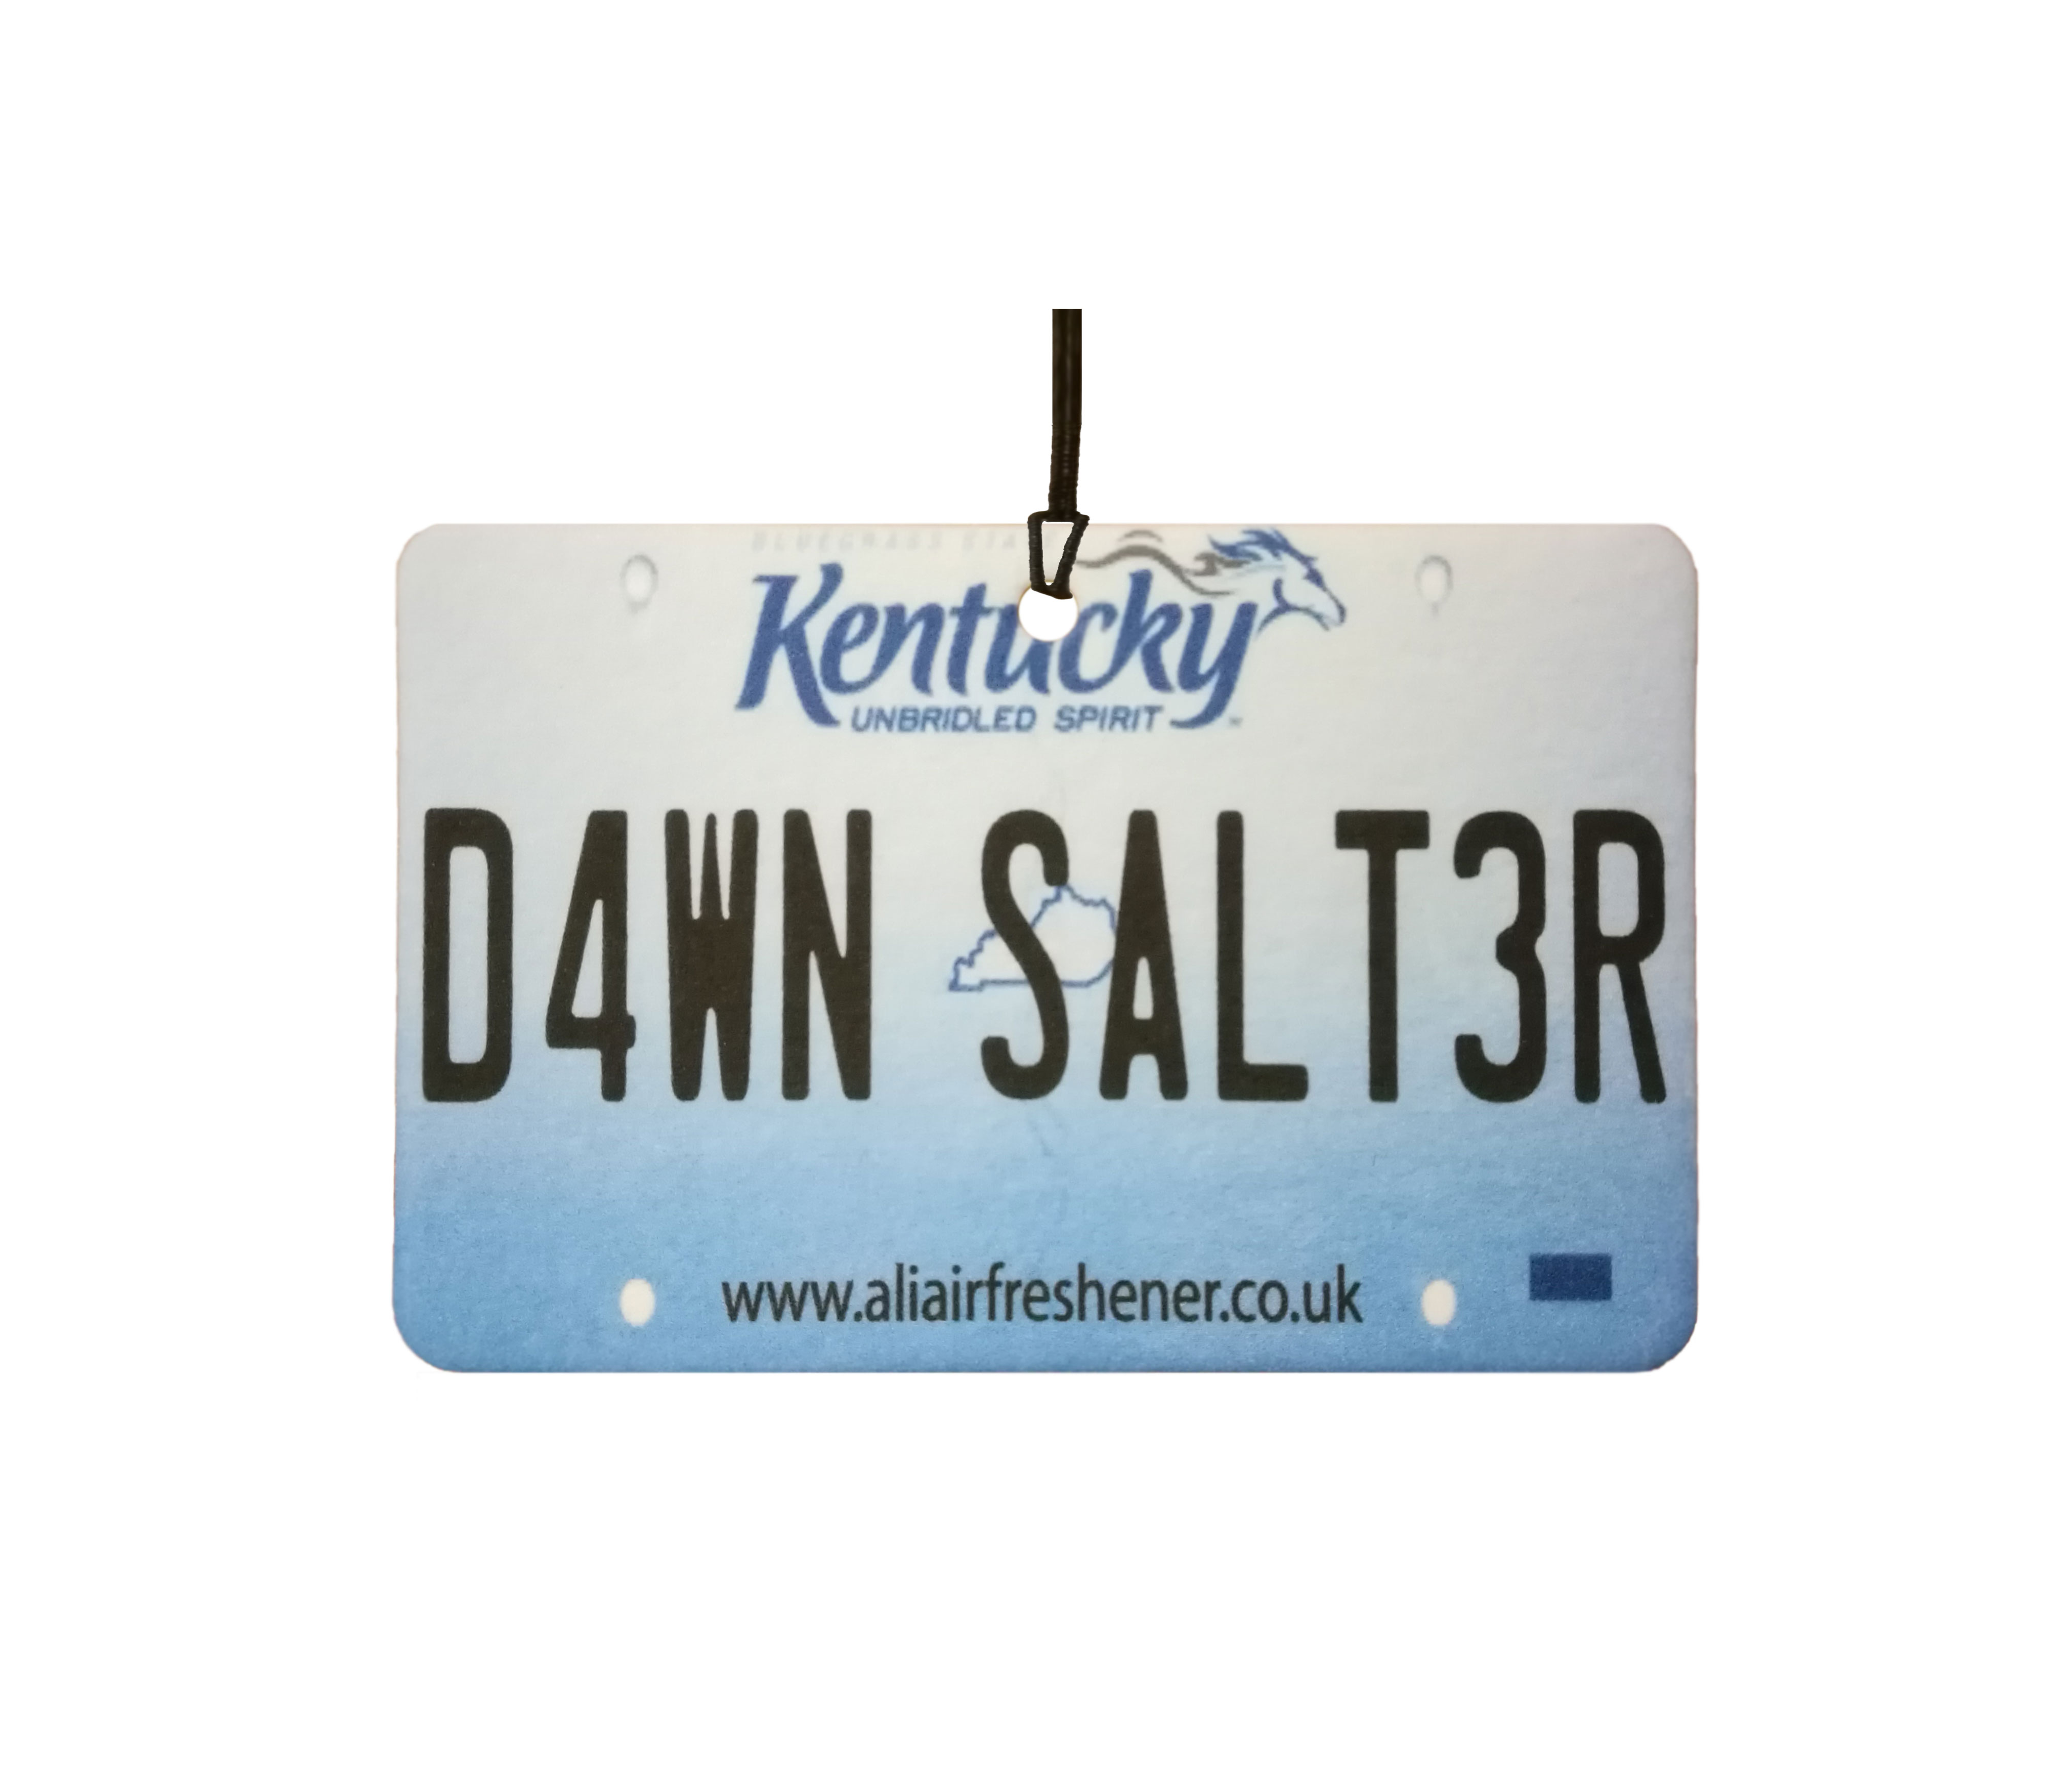 Personalised Kentucky License Plate